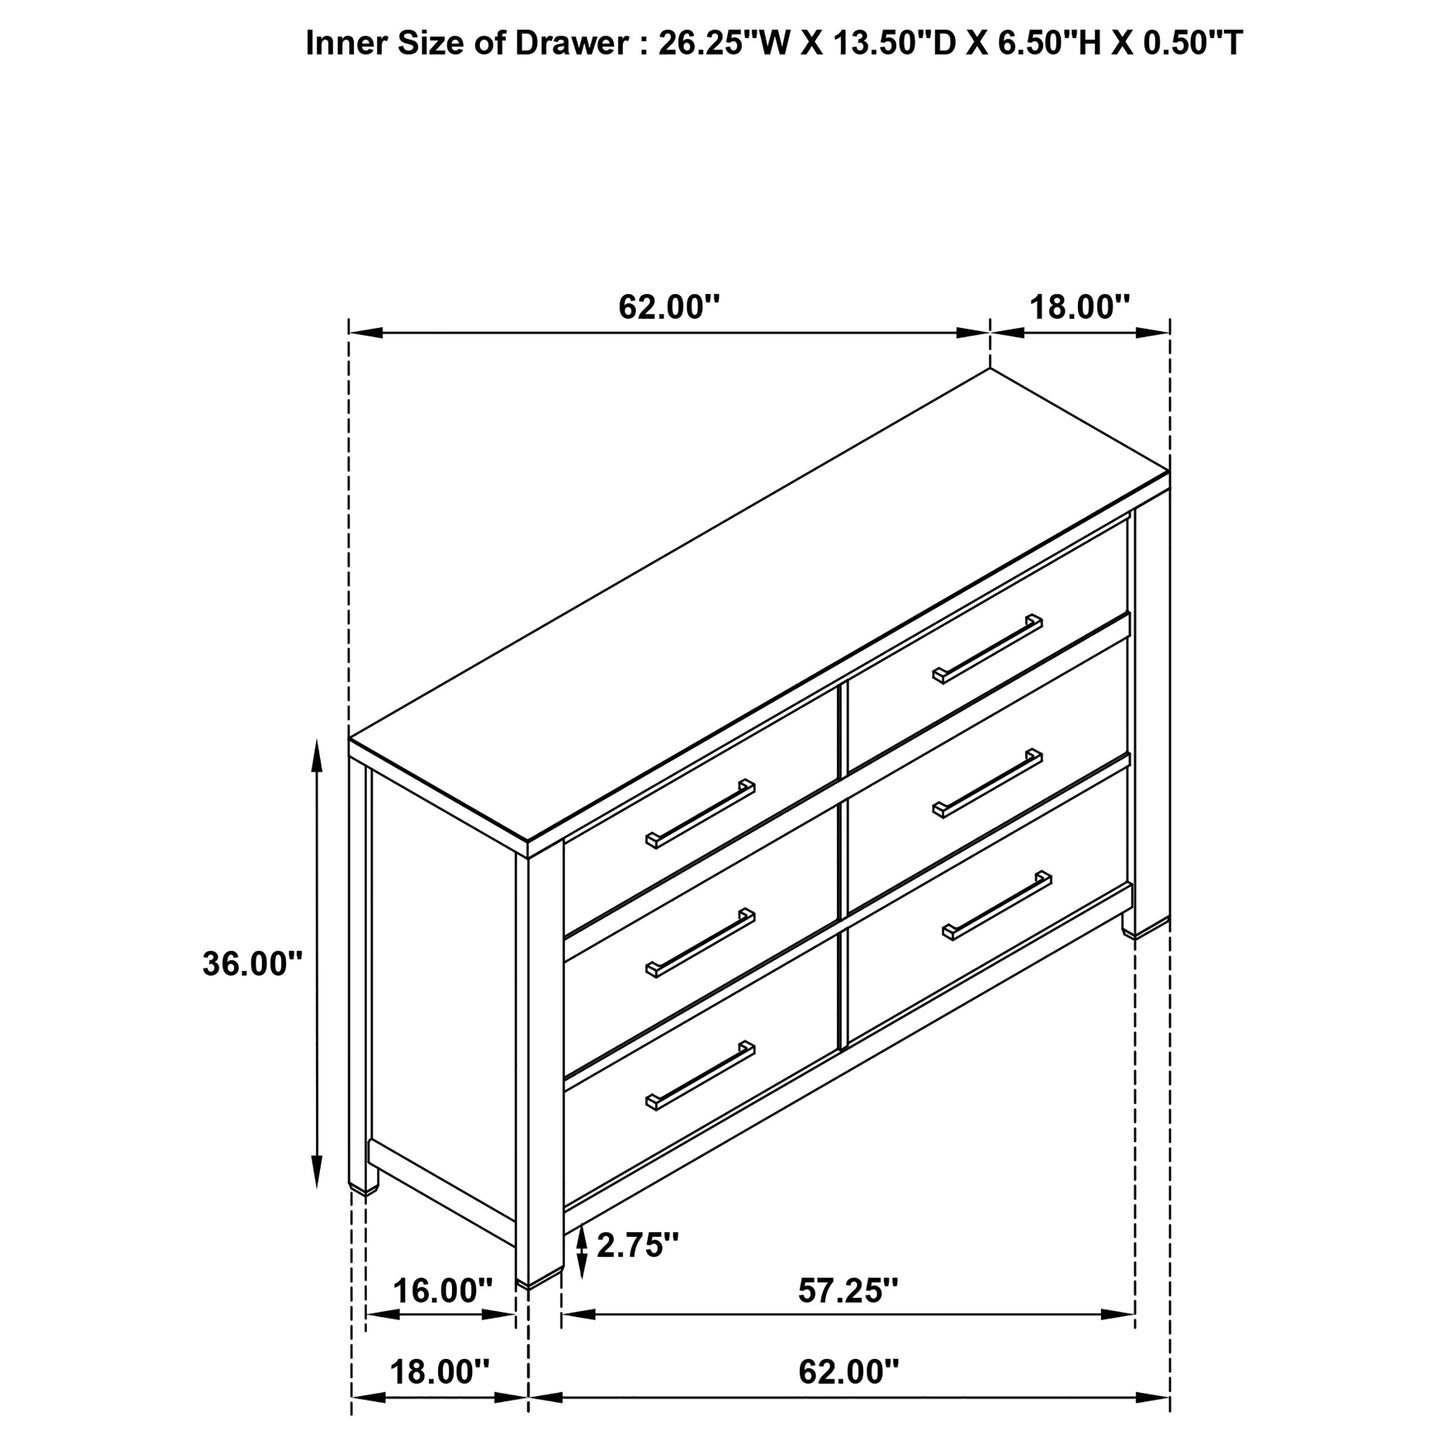 Kieran 6-drawer Bedroom Dresser Grey